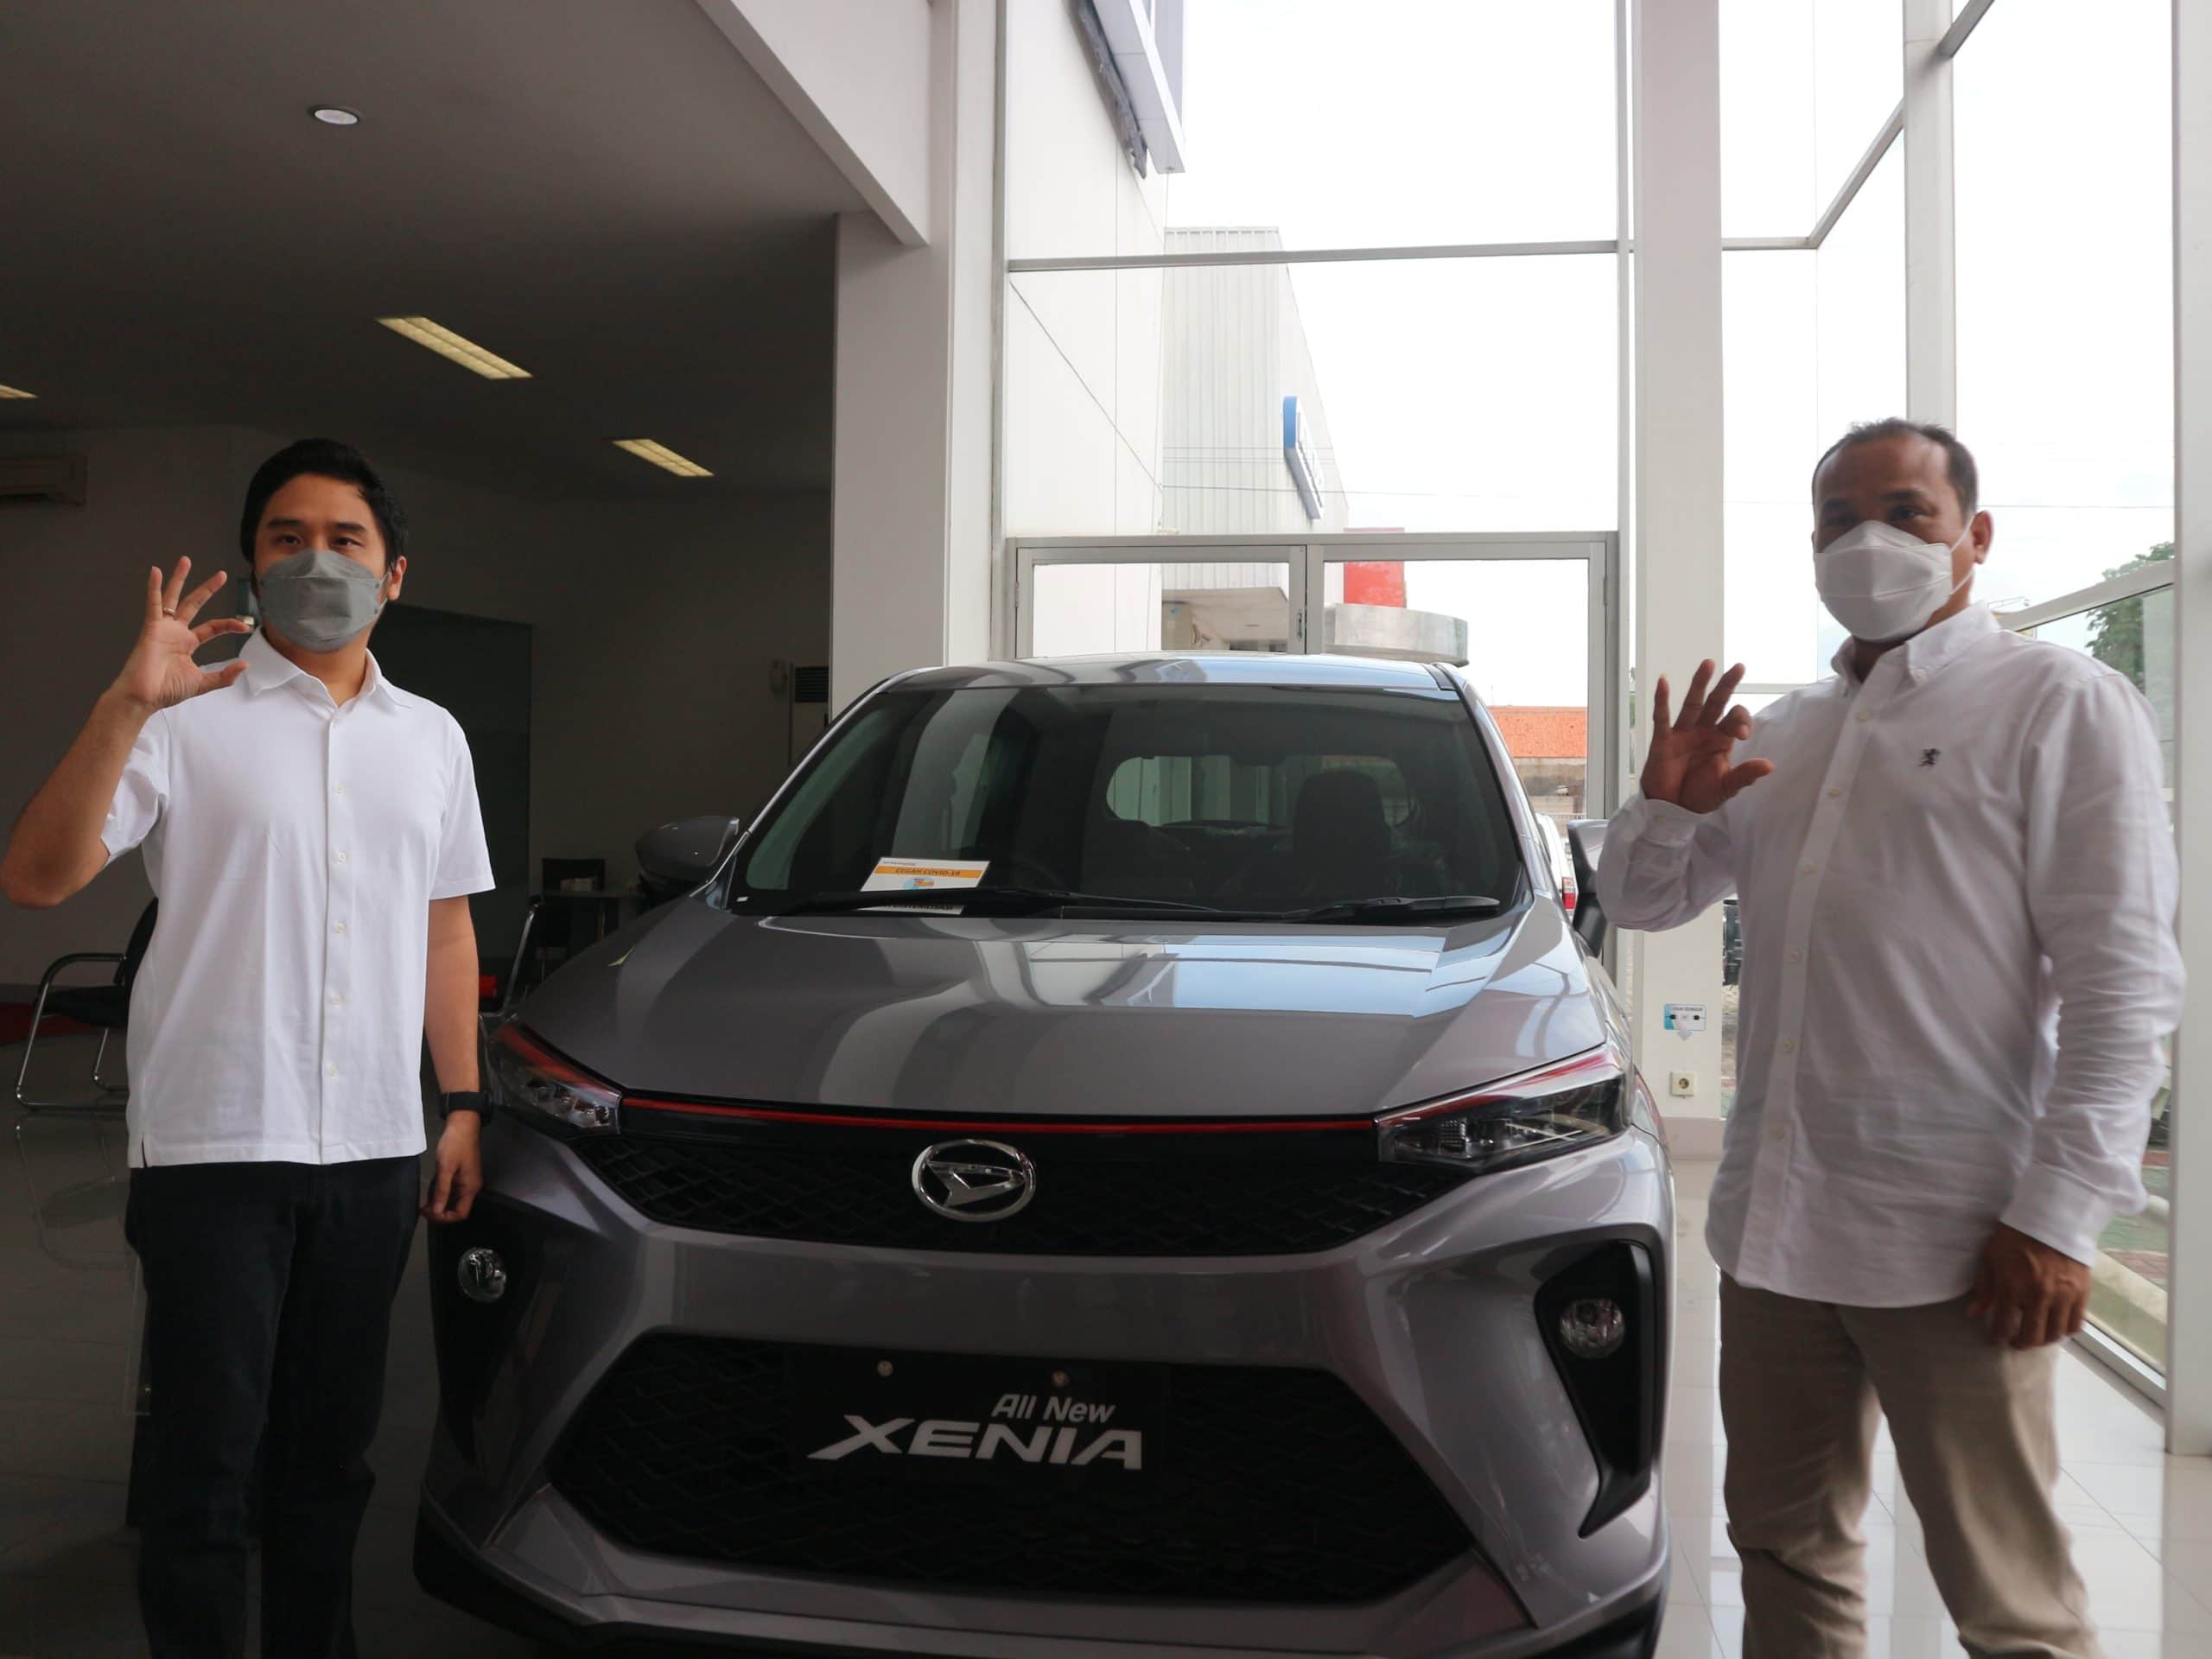 All New Xenia Sudah Tersedia di Daihatsu Cirebon